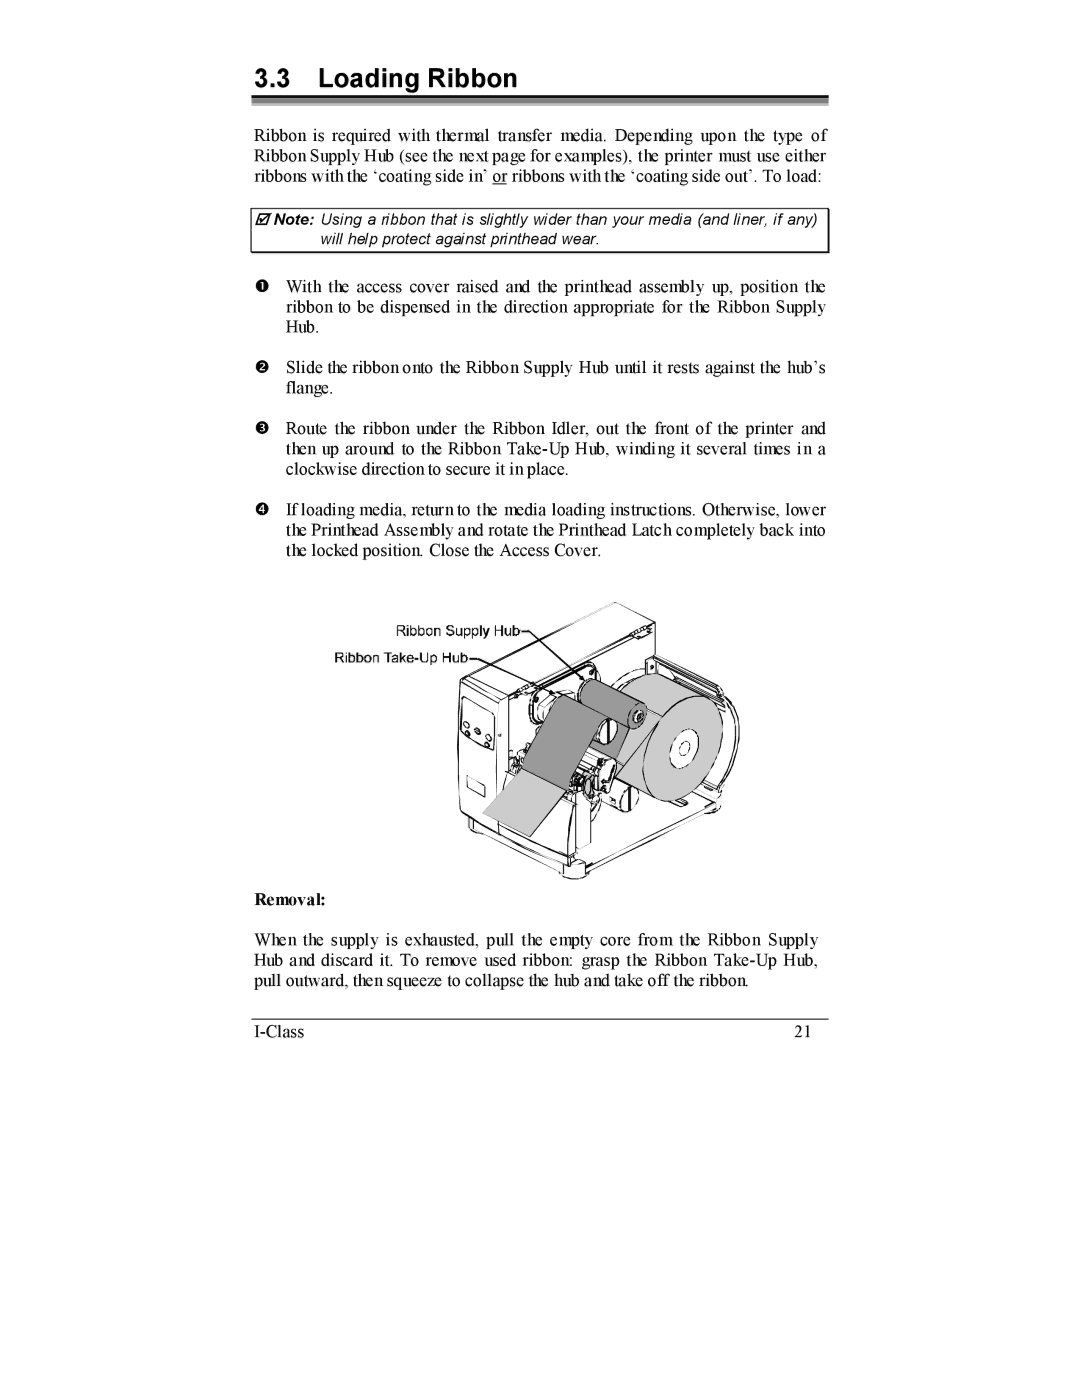 Datamax I-4208, I-4206 manual Loading Ribbon, Removal 